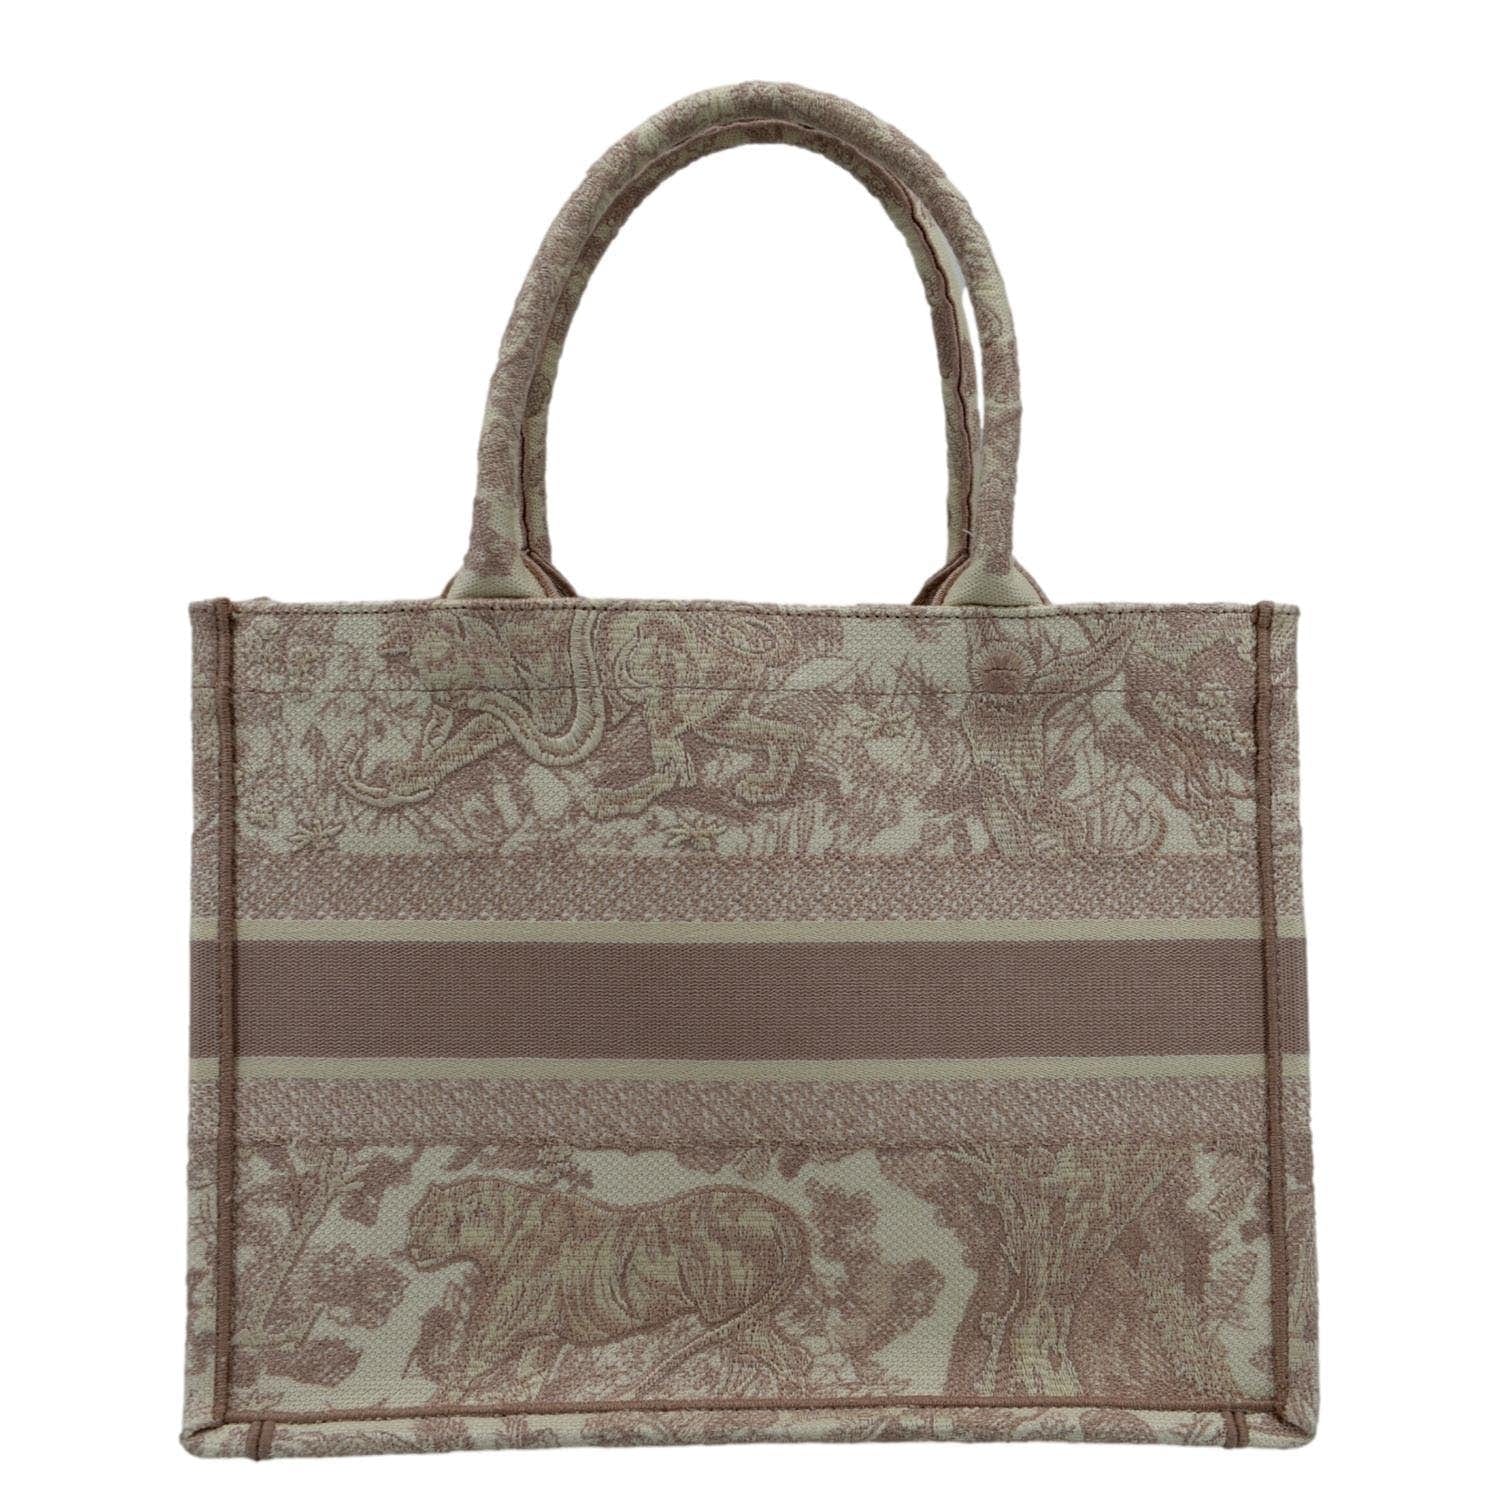 Christian Dior Book Toile de Jouy Motif Embroidery Tote Bag